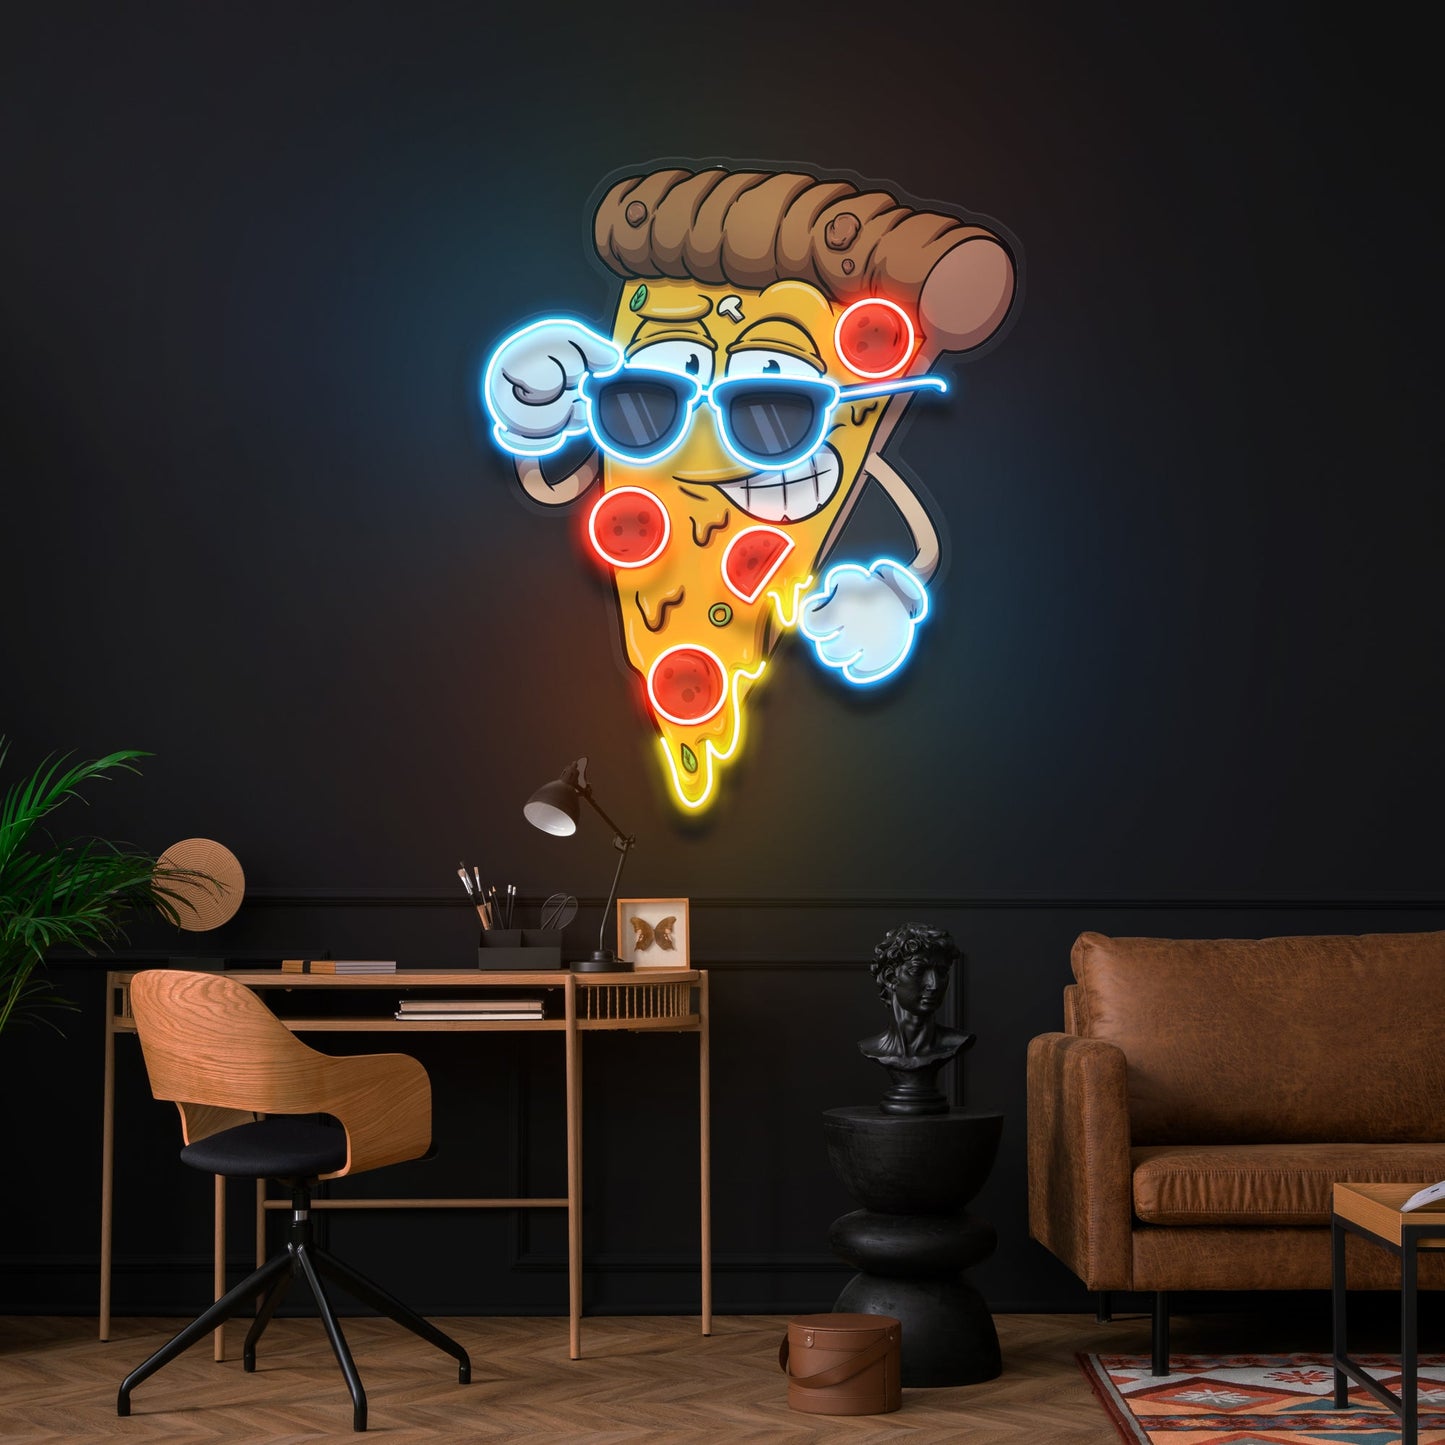 Cute Slice Of Cartoon Pizza Artwork Led Neon Sign Light - Neonzastudio